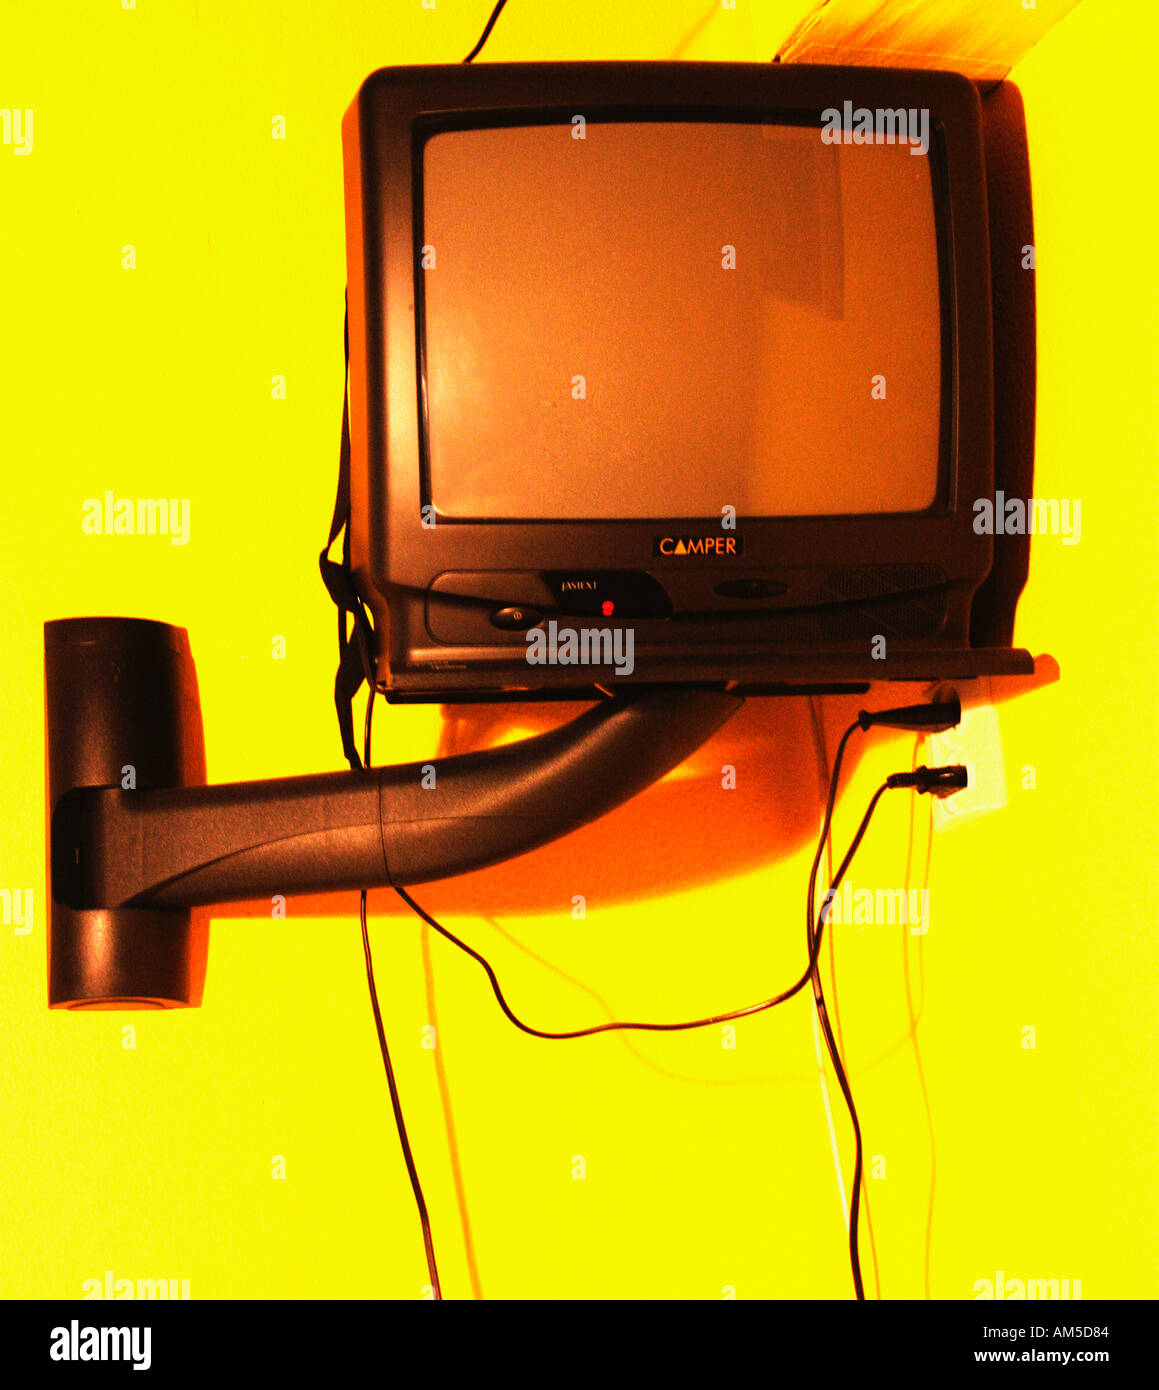 TV television set on wall bracket arm Stock Photo